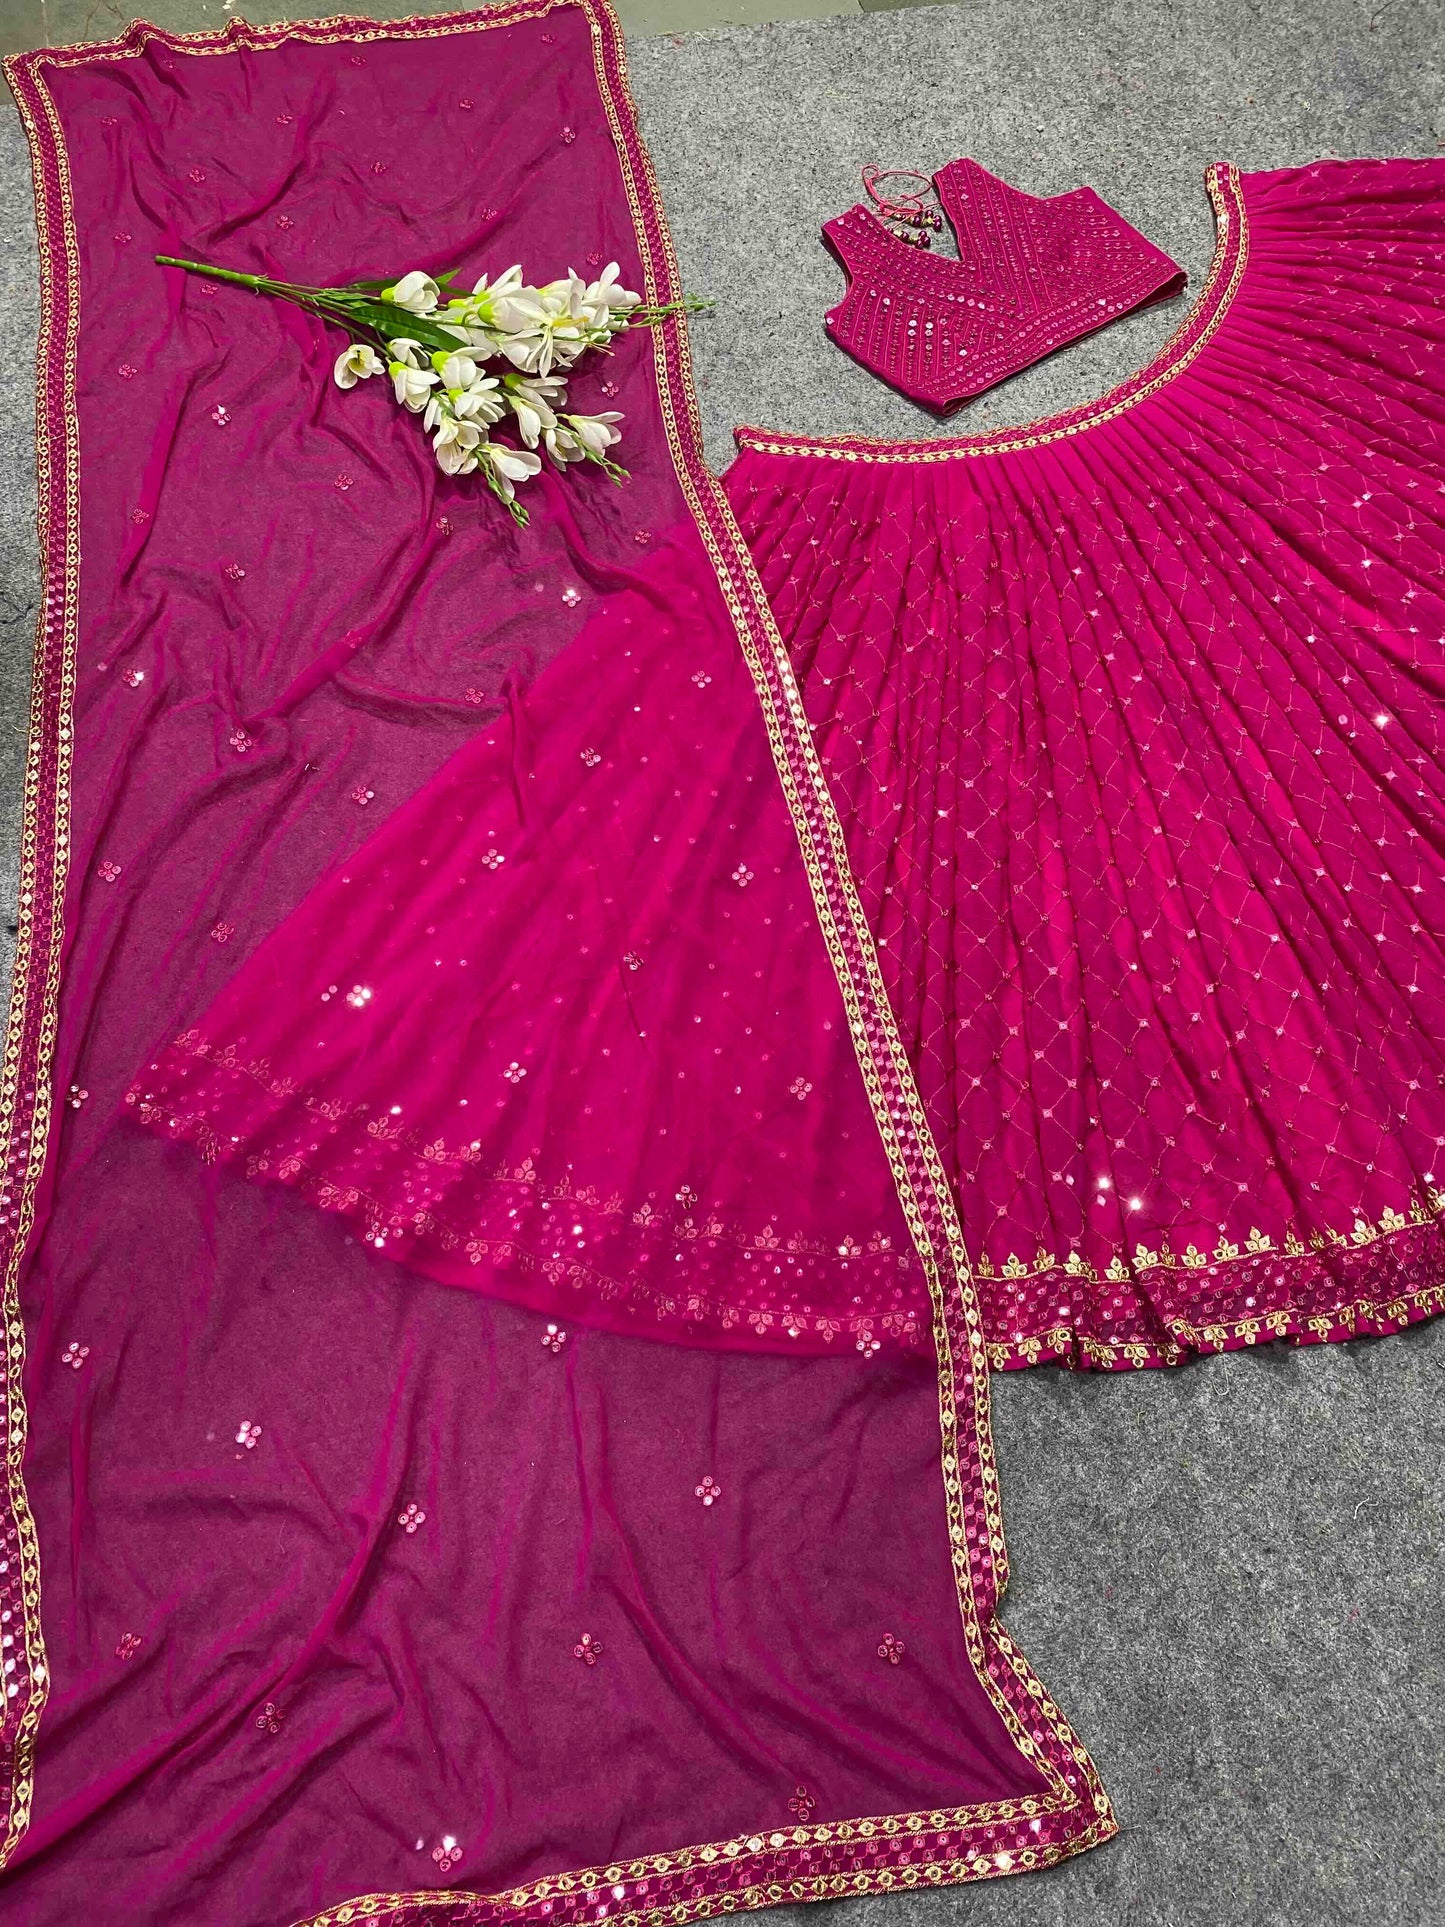 Shafnufab Women's Georgette Semi Stitched Lehenga Choli  In  Rani pink  Colour SF21845